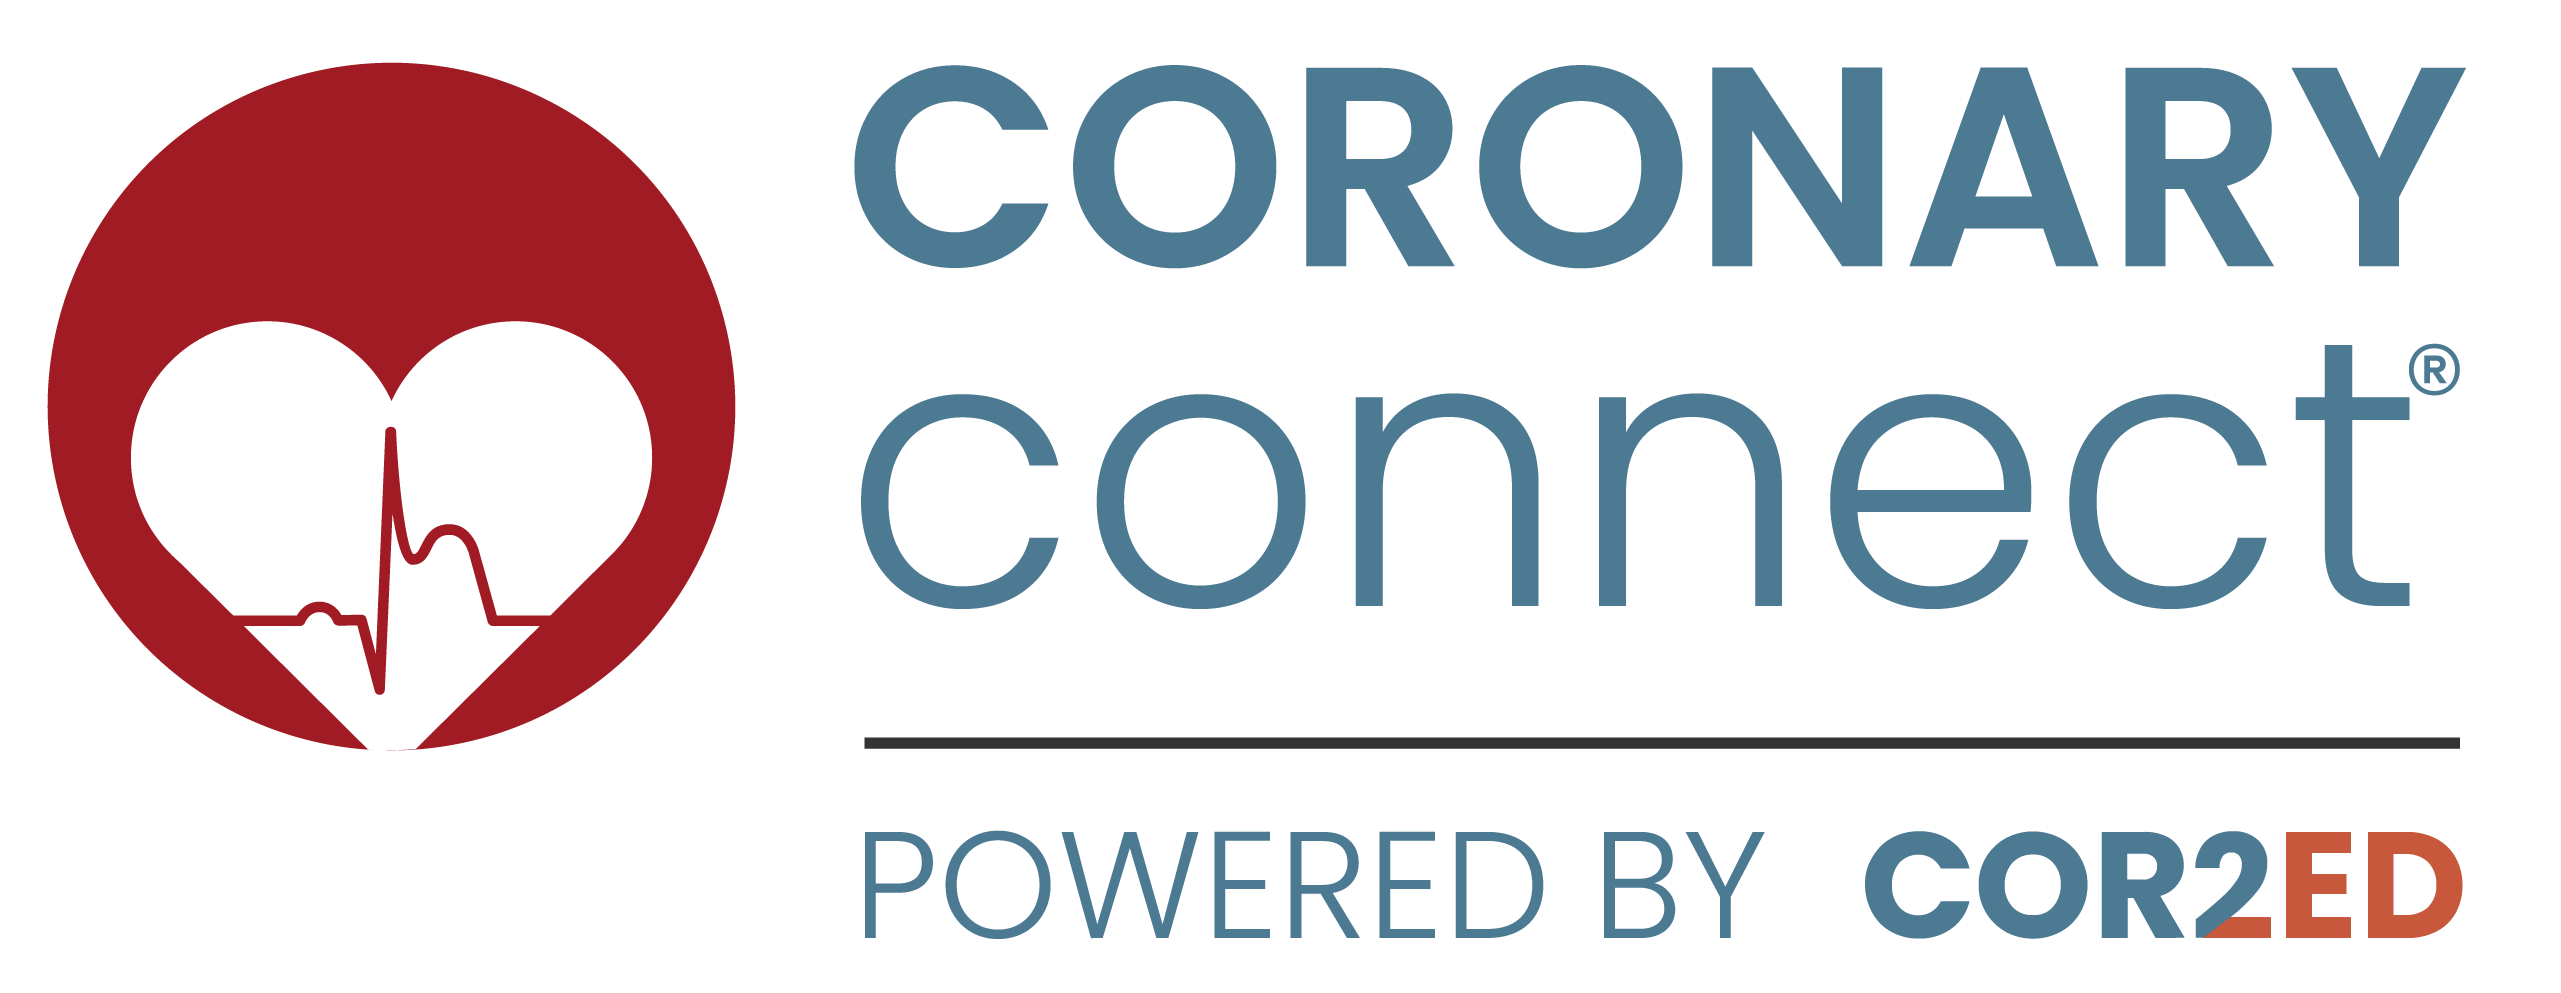 CORONARY CONNECT